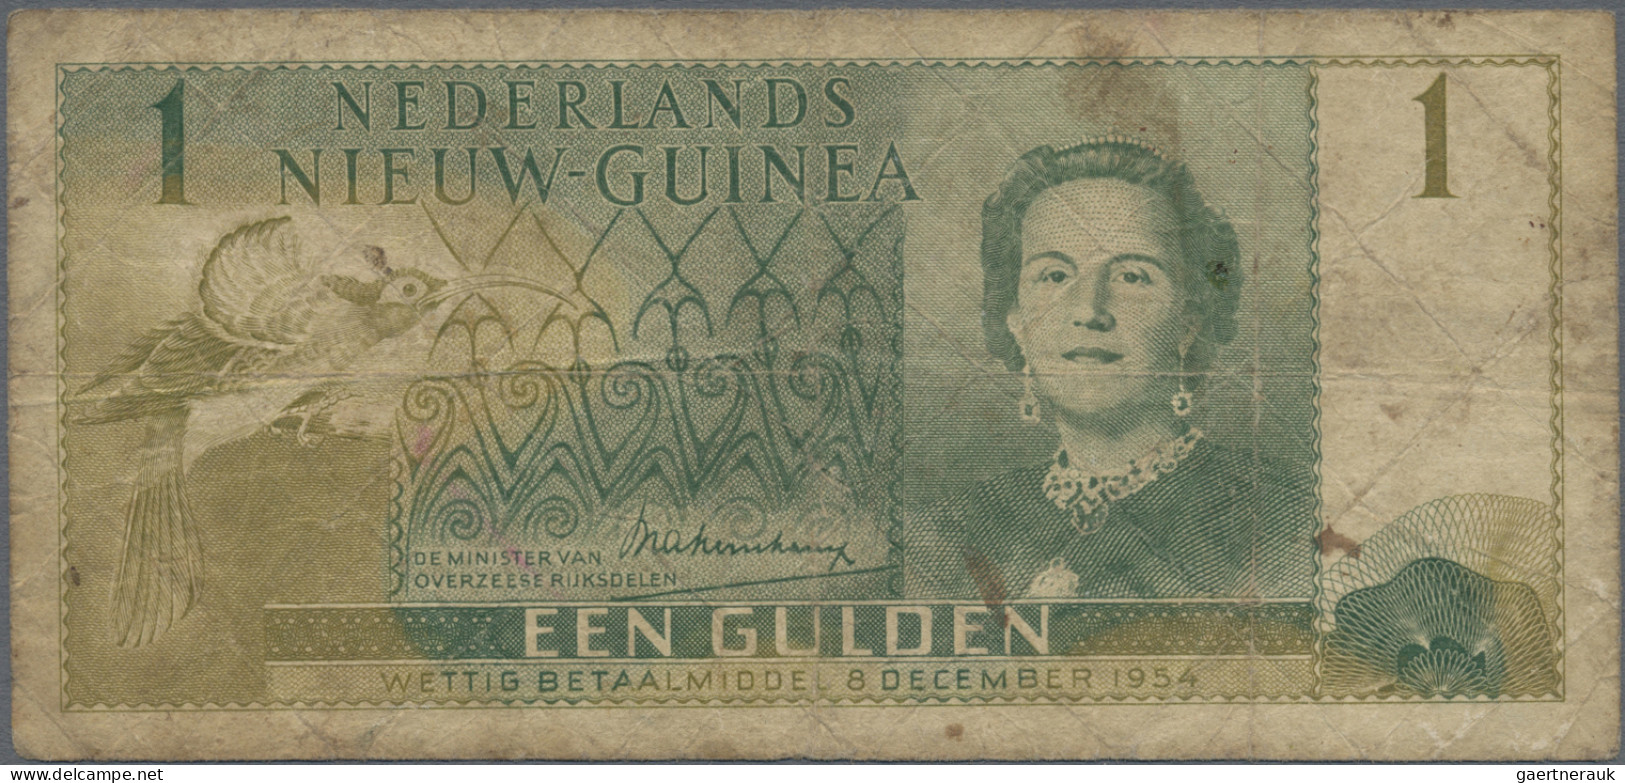 Netherlands New Guinea: Nederlands Nieuw-Guinea, 1 Gulden 1954, P.11, Toned Pape - Papouasie-Nouvelle-Guinée